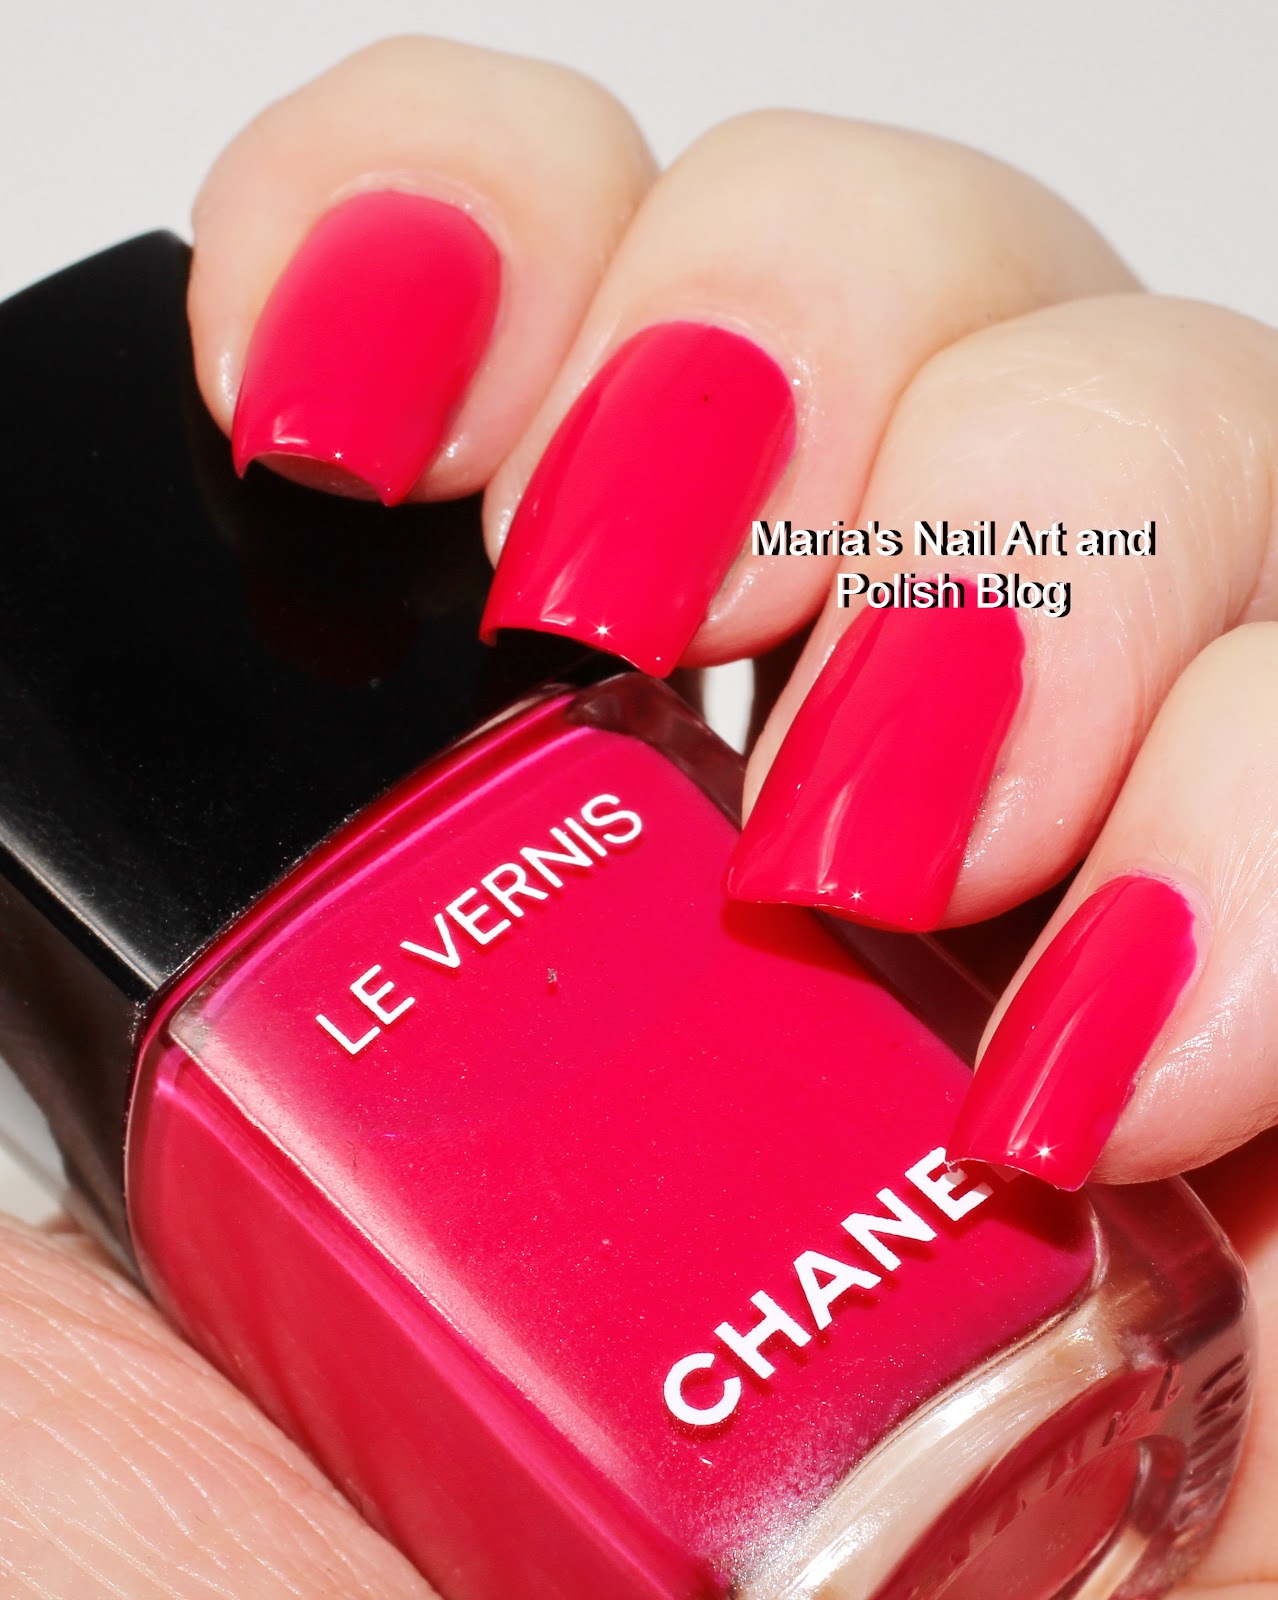 Marias Nail Art and Polish Blog: Chanel Camelia 506 swatches